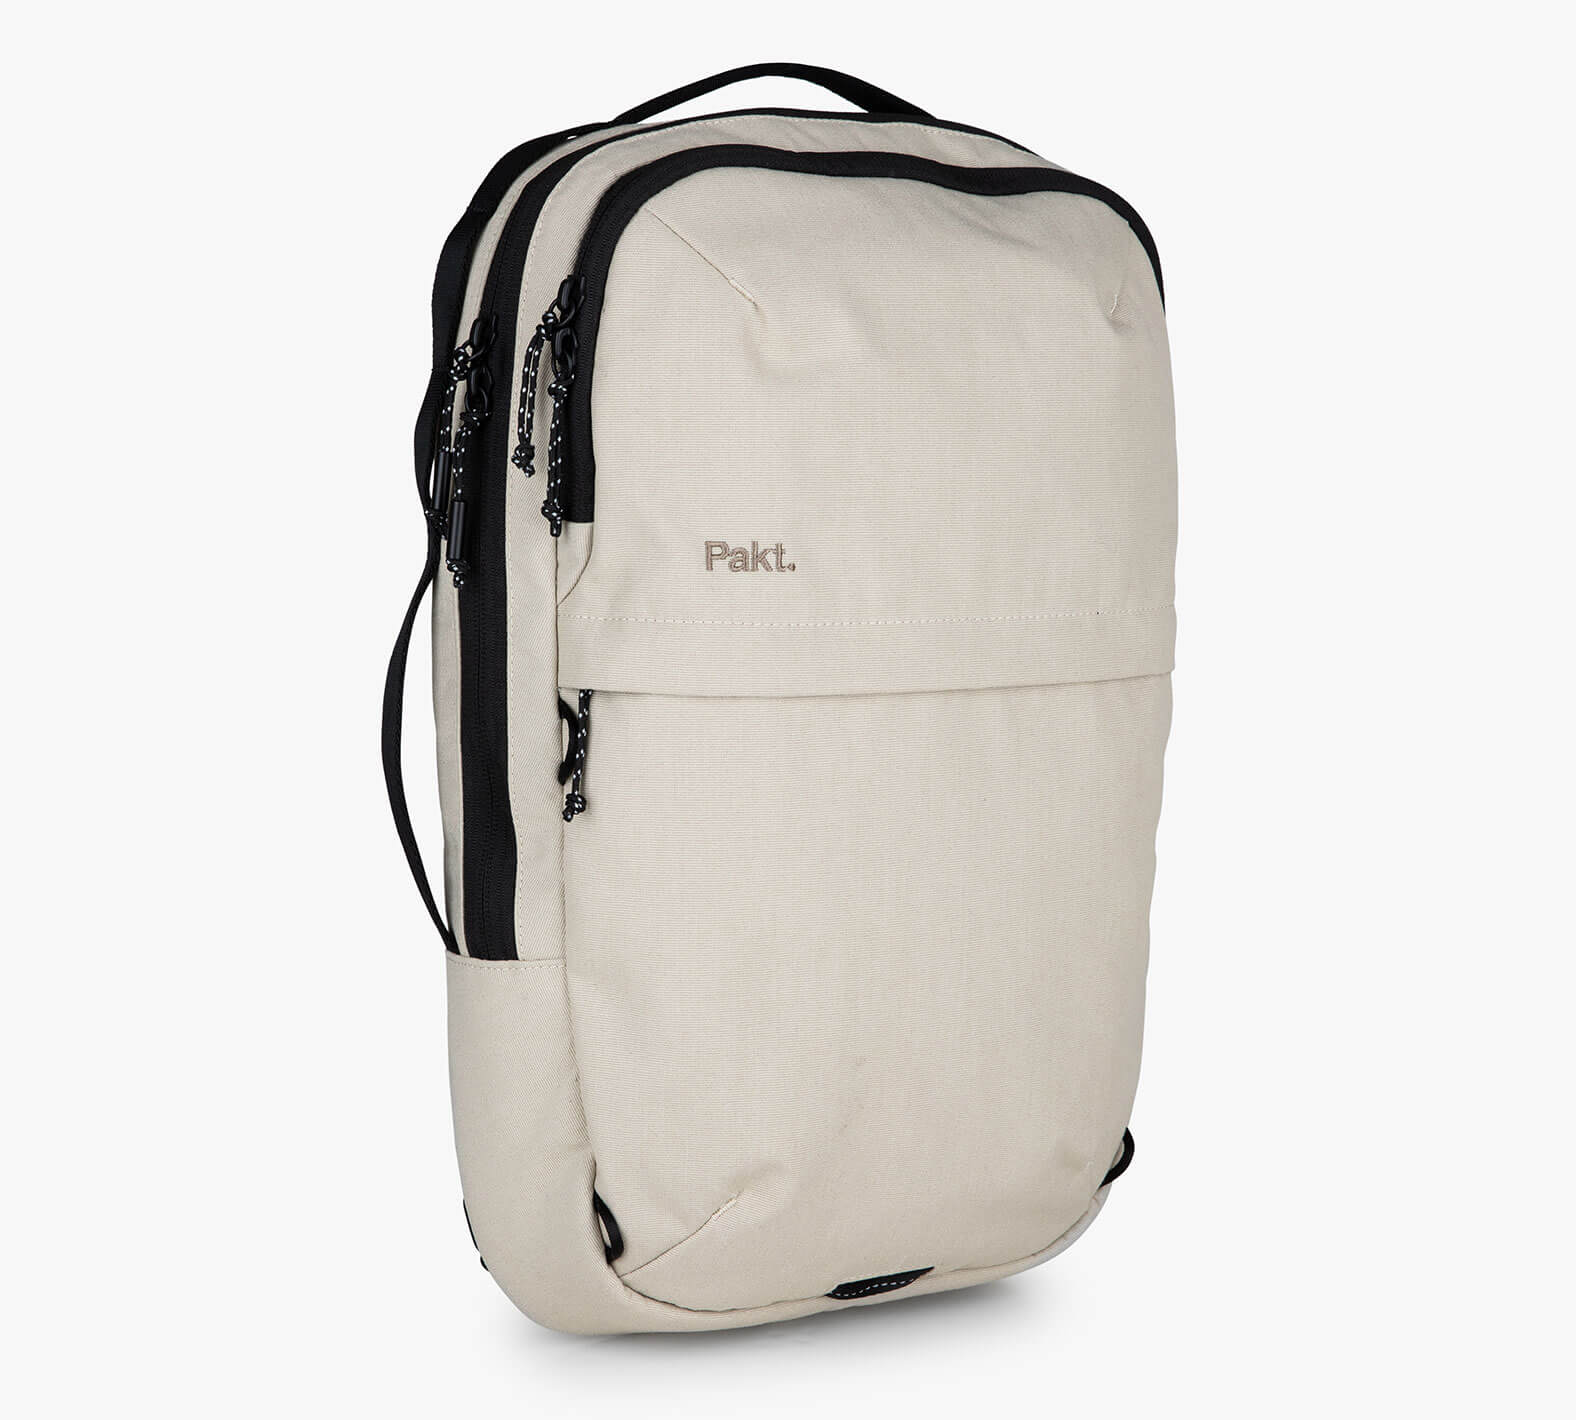 32 Inch Designer Laptop Bag, Capacity: 5L